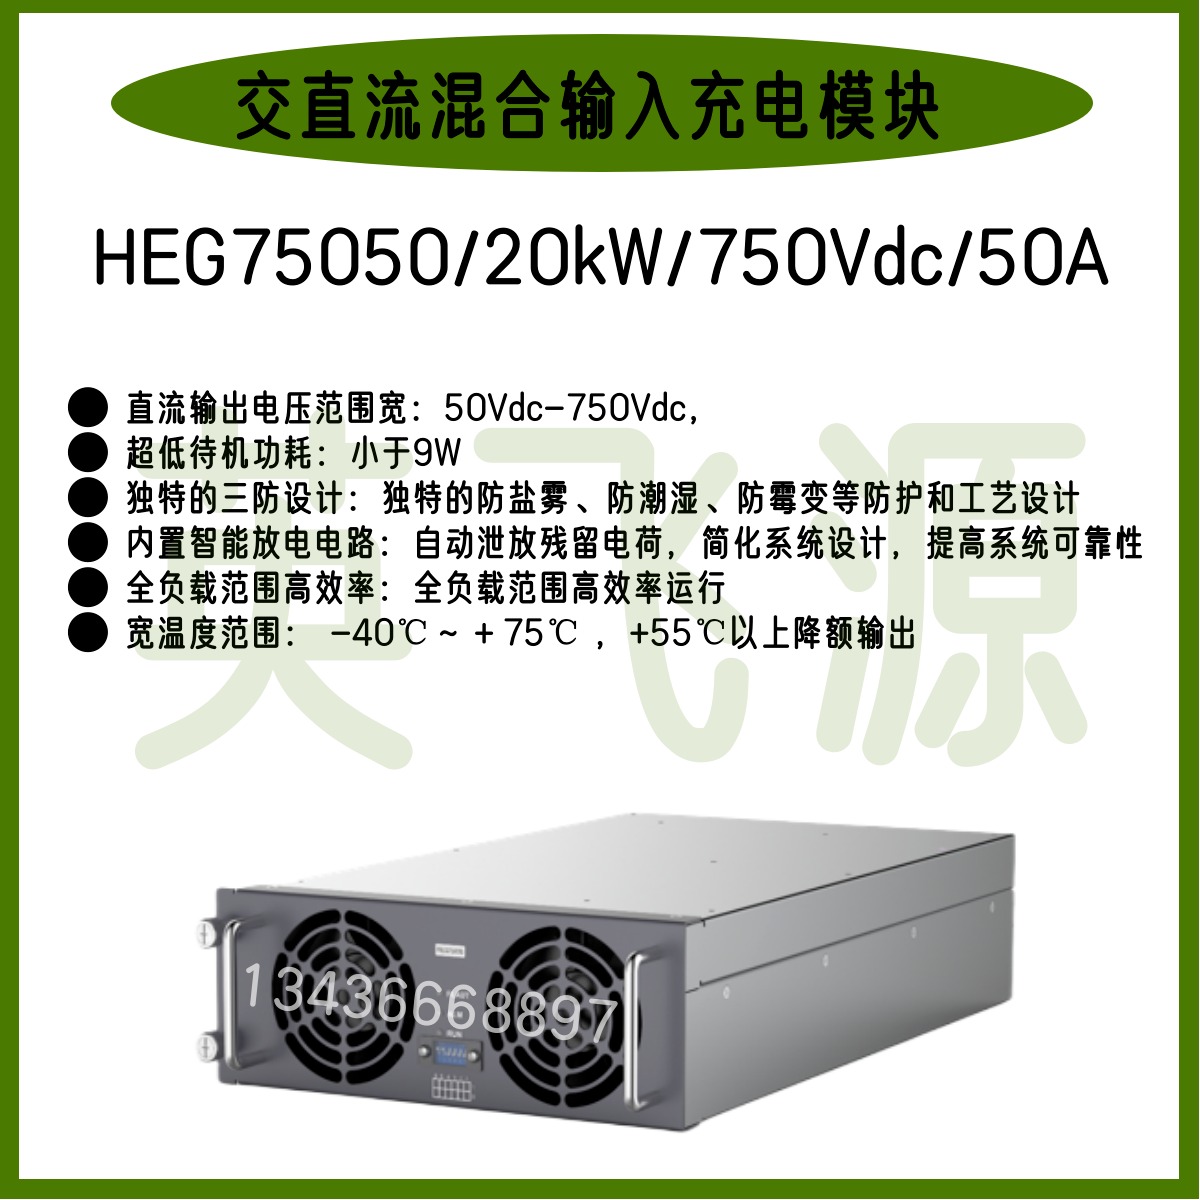 INFY英飞源HEG75050/20kW/750Vdc/50A 交直流混合输入变换模块